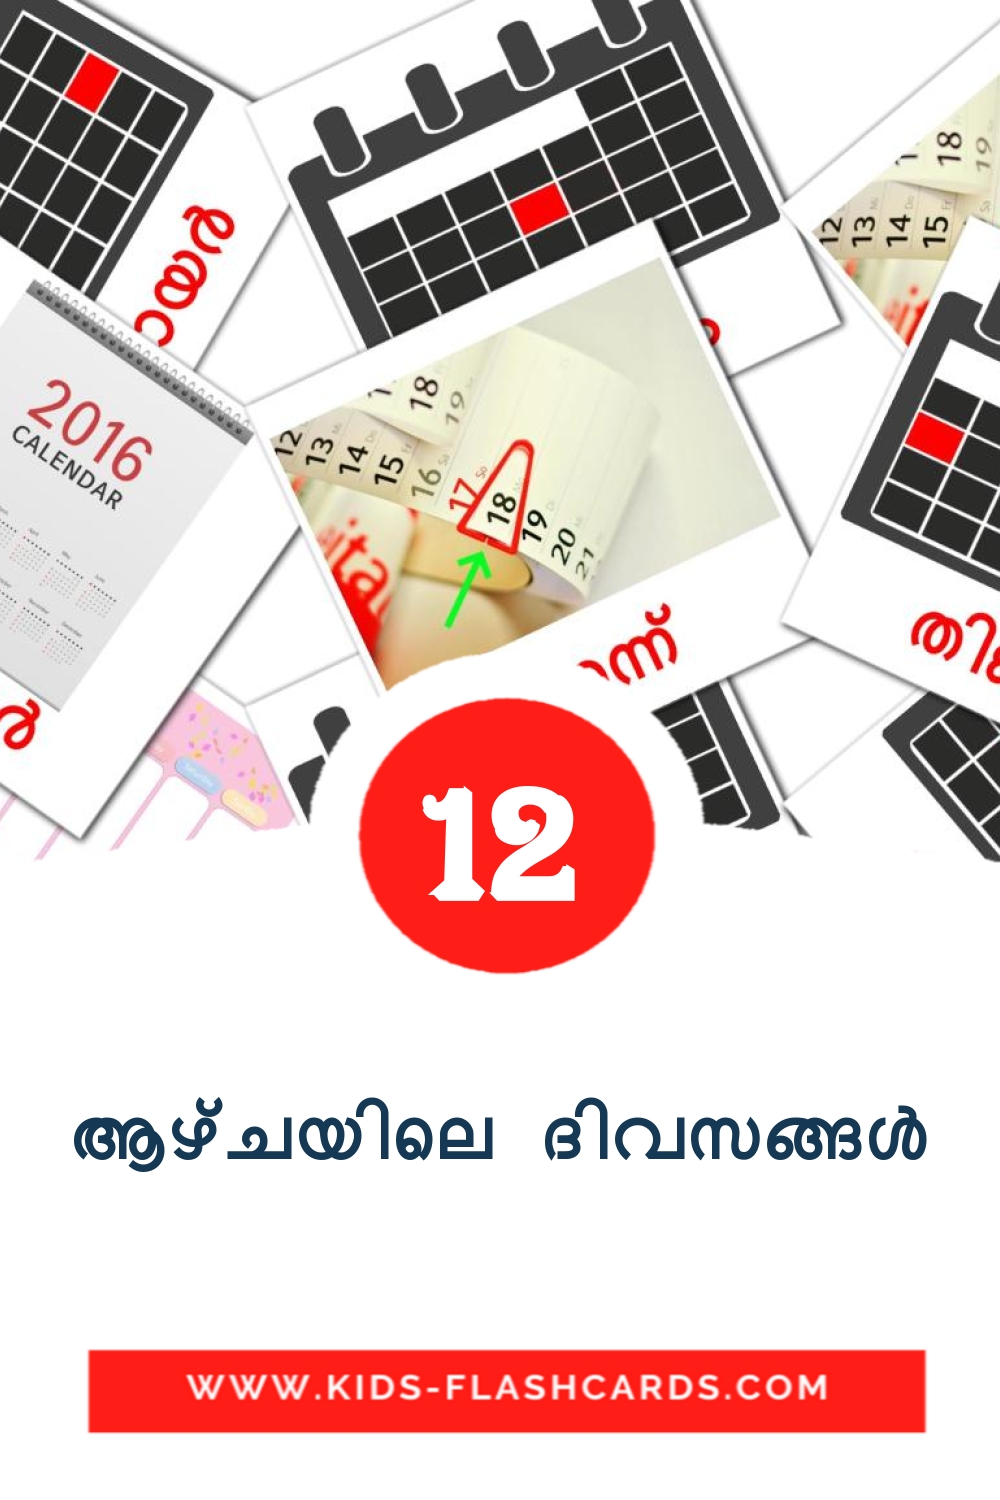 12 tarjetas didacticas de ആഴ്ചയിലെ ദിവസങ്ങൾ para el jardín de infancia en malayalam